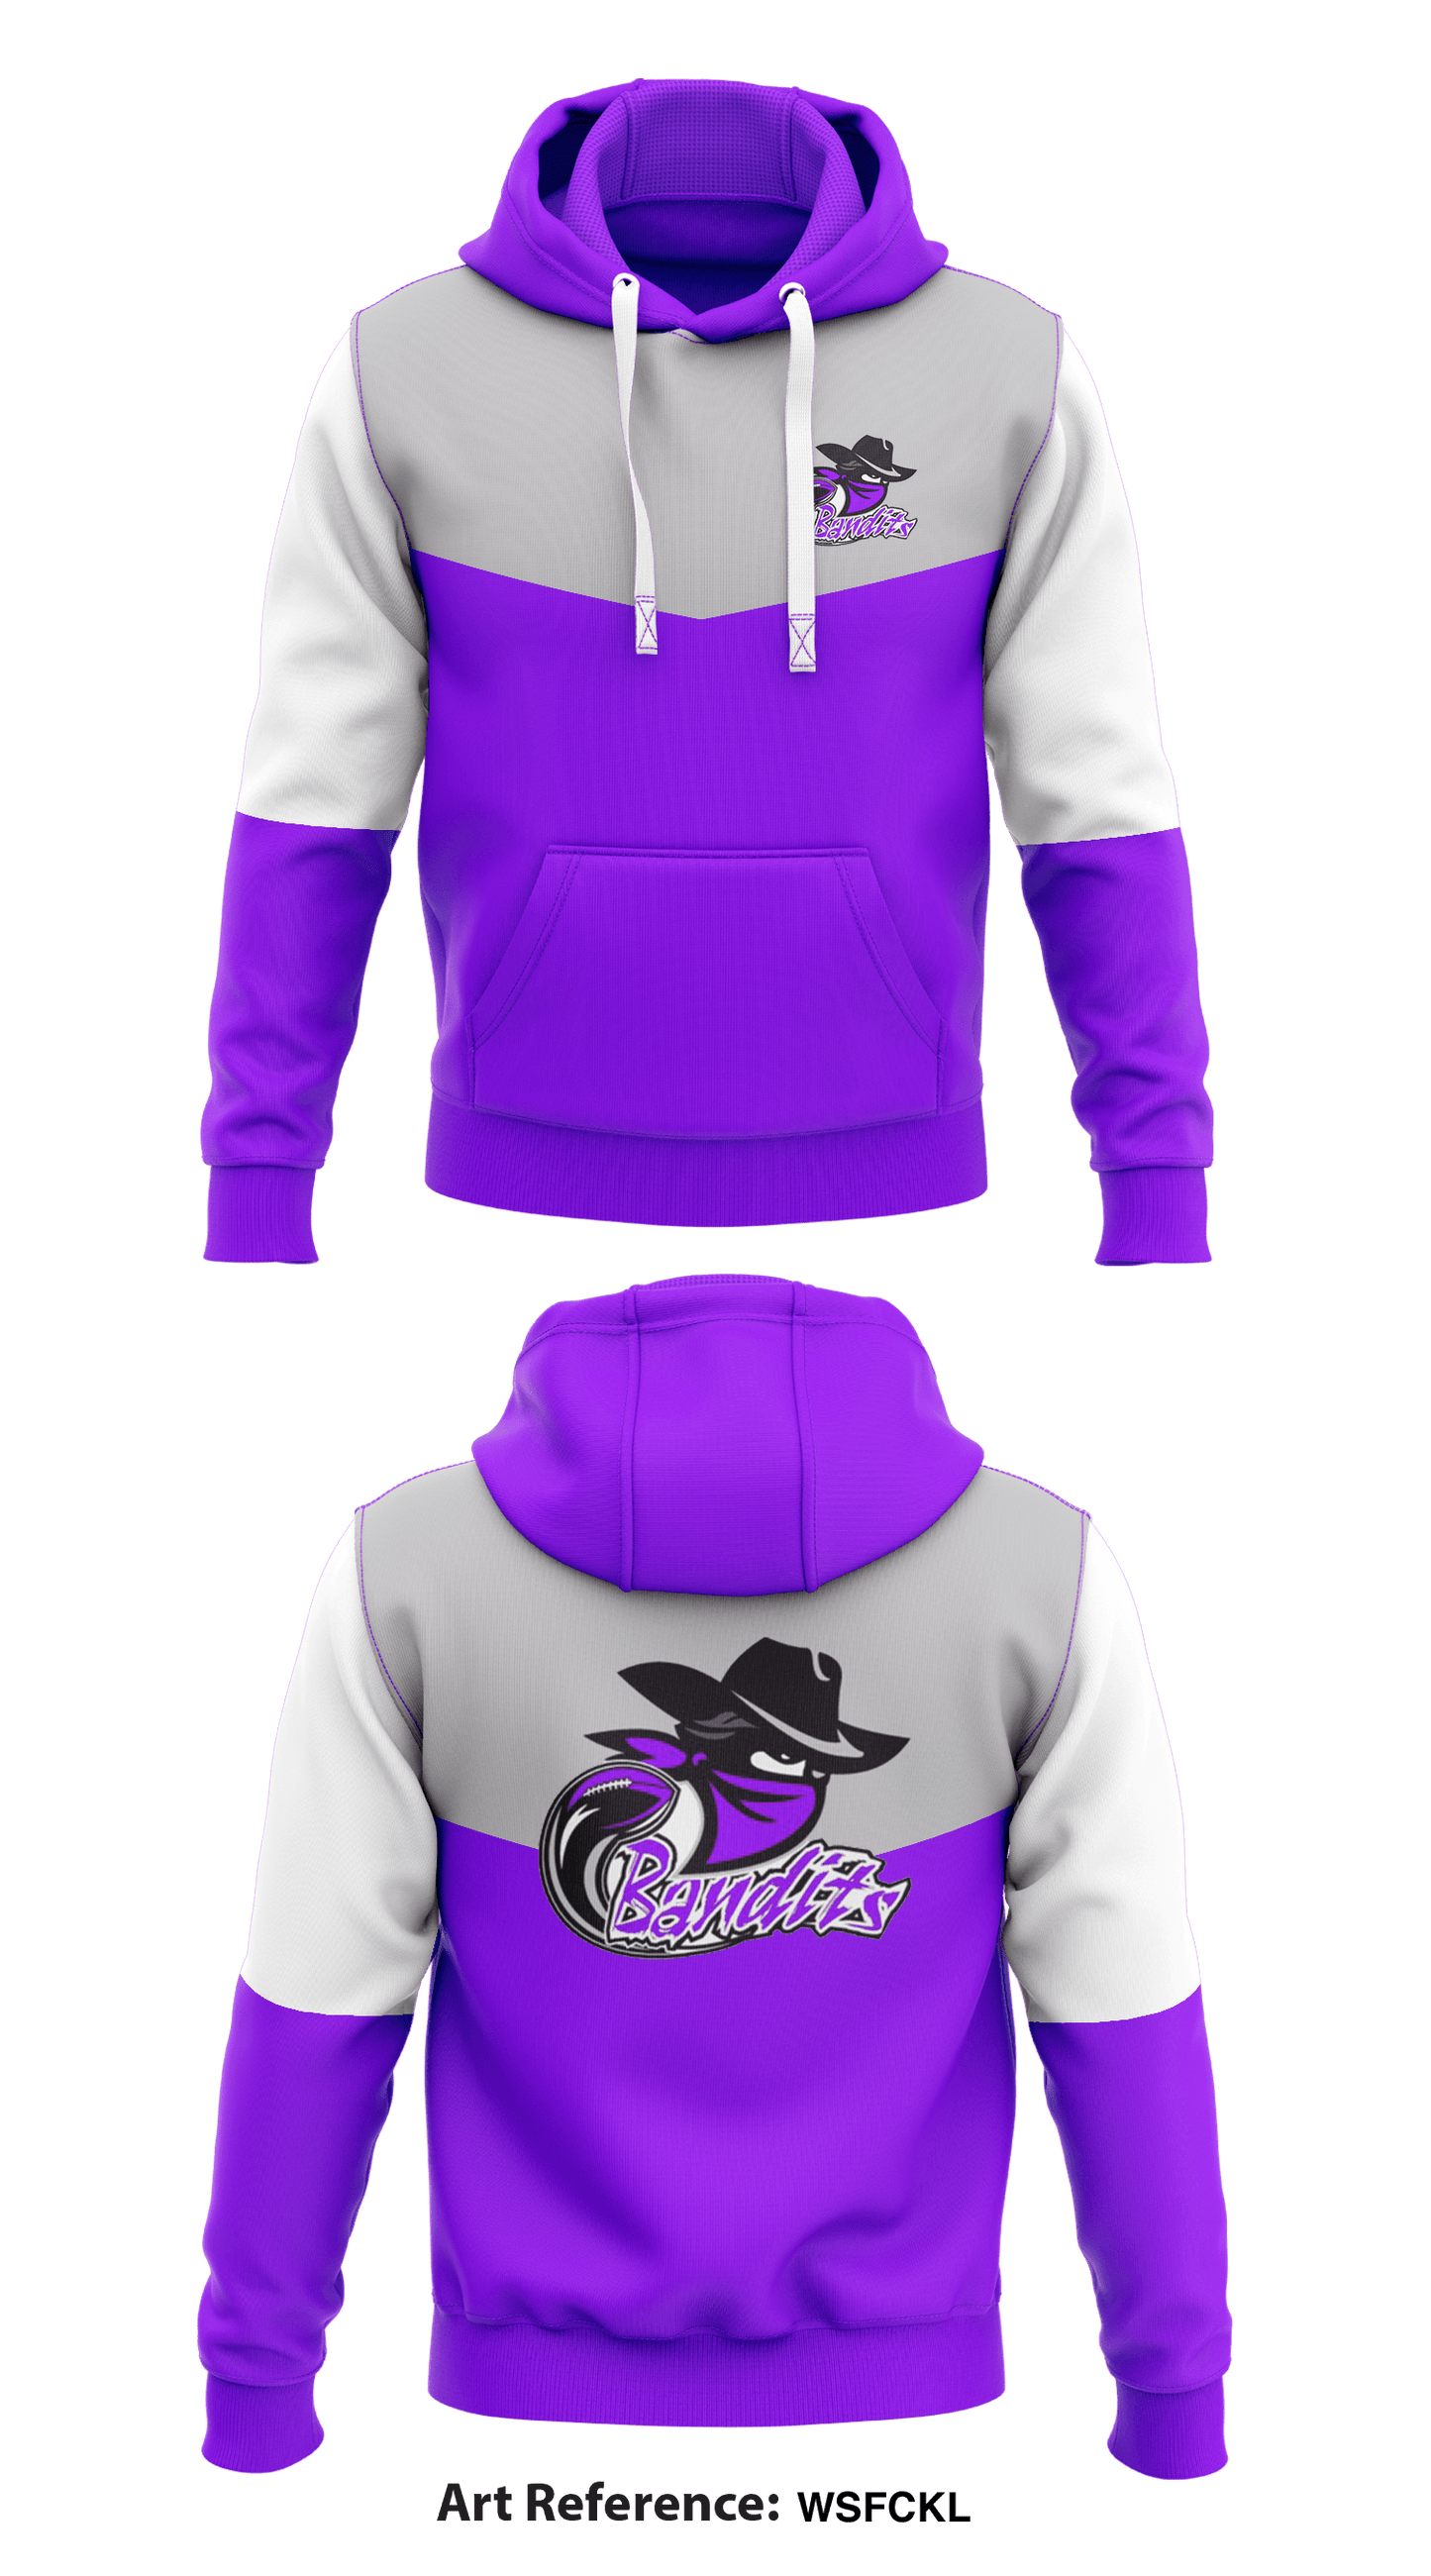 Bandits Store 1 Core Men's Hooded Performance Sweatshirt - WSfCKL